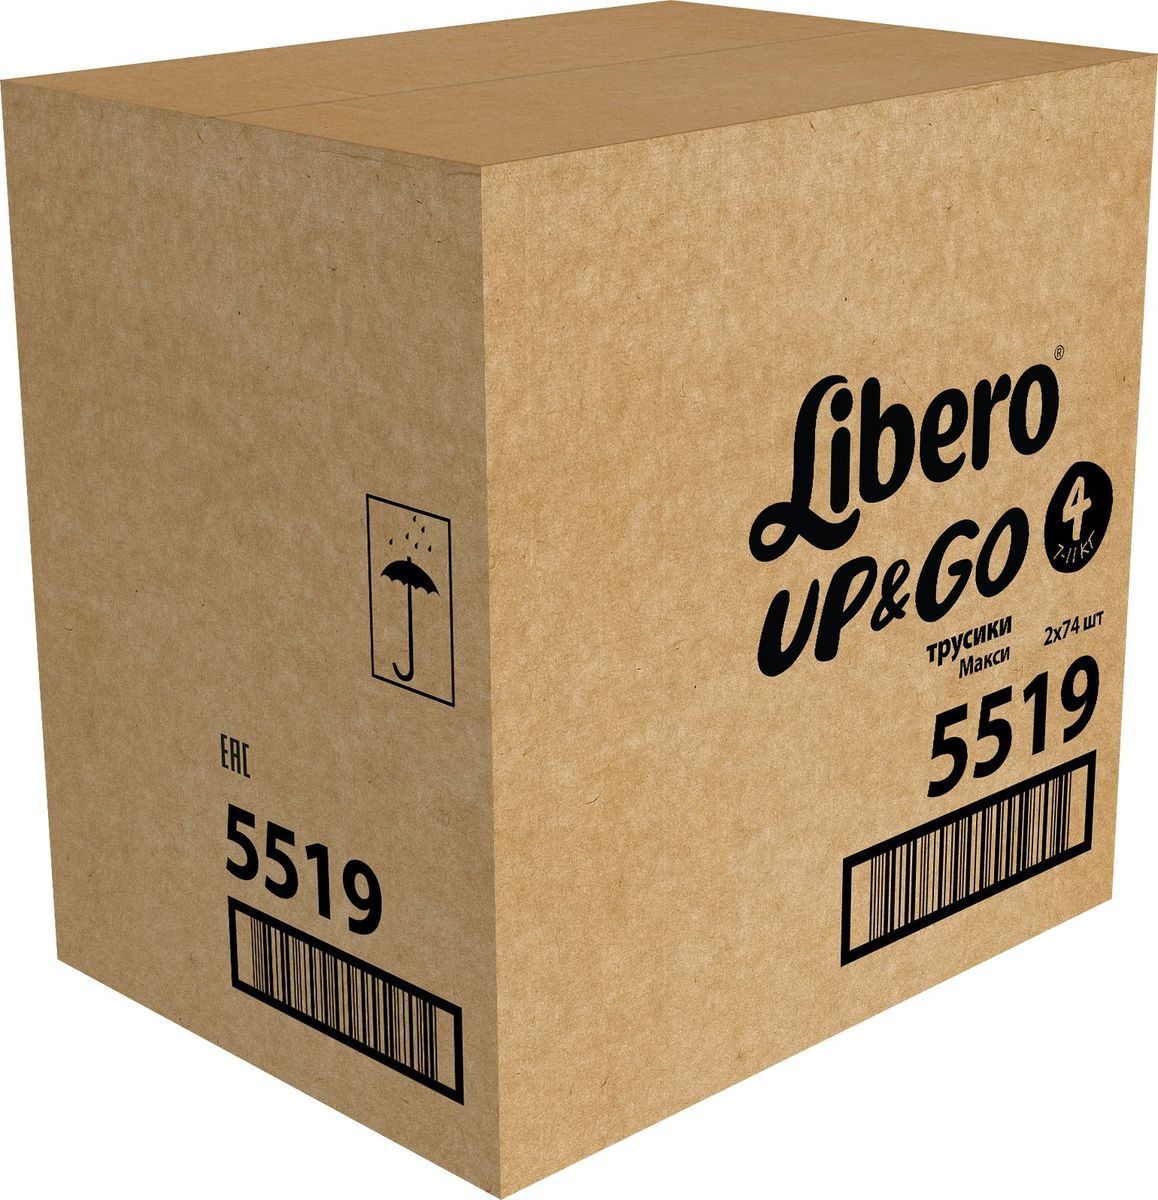  Libero Up&Go 4, 7-11 , 148 